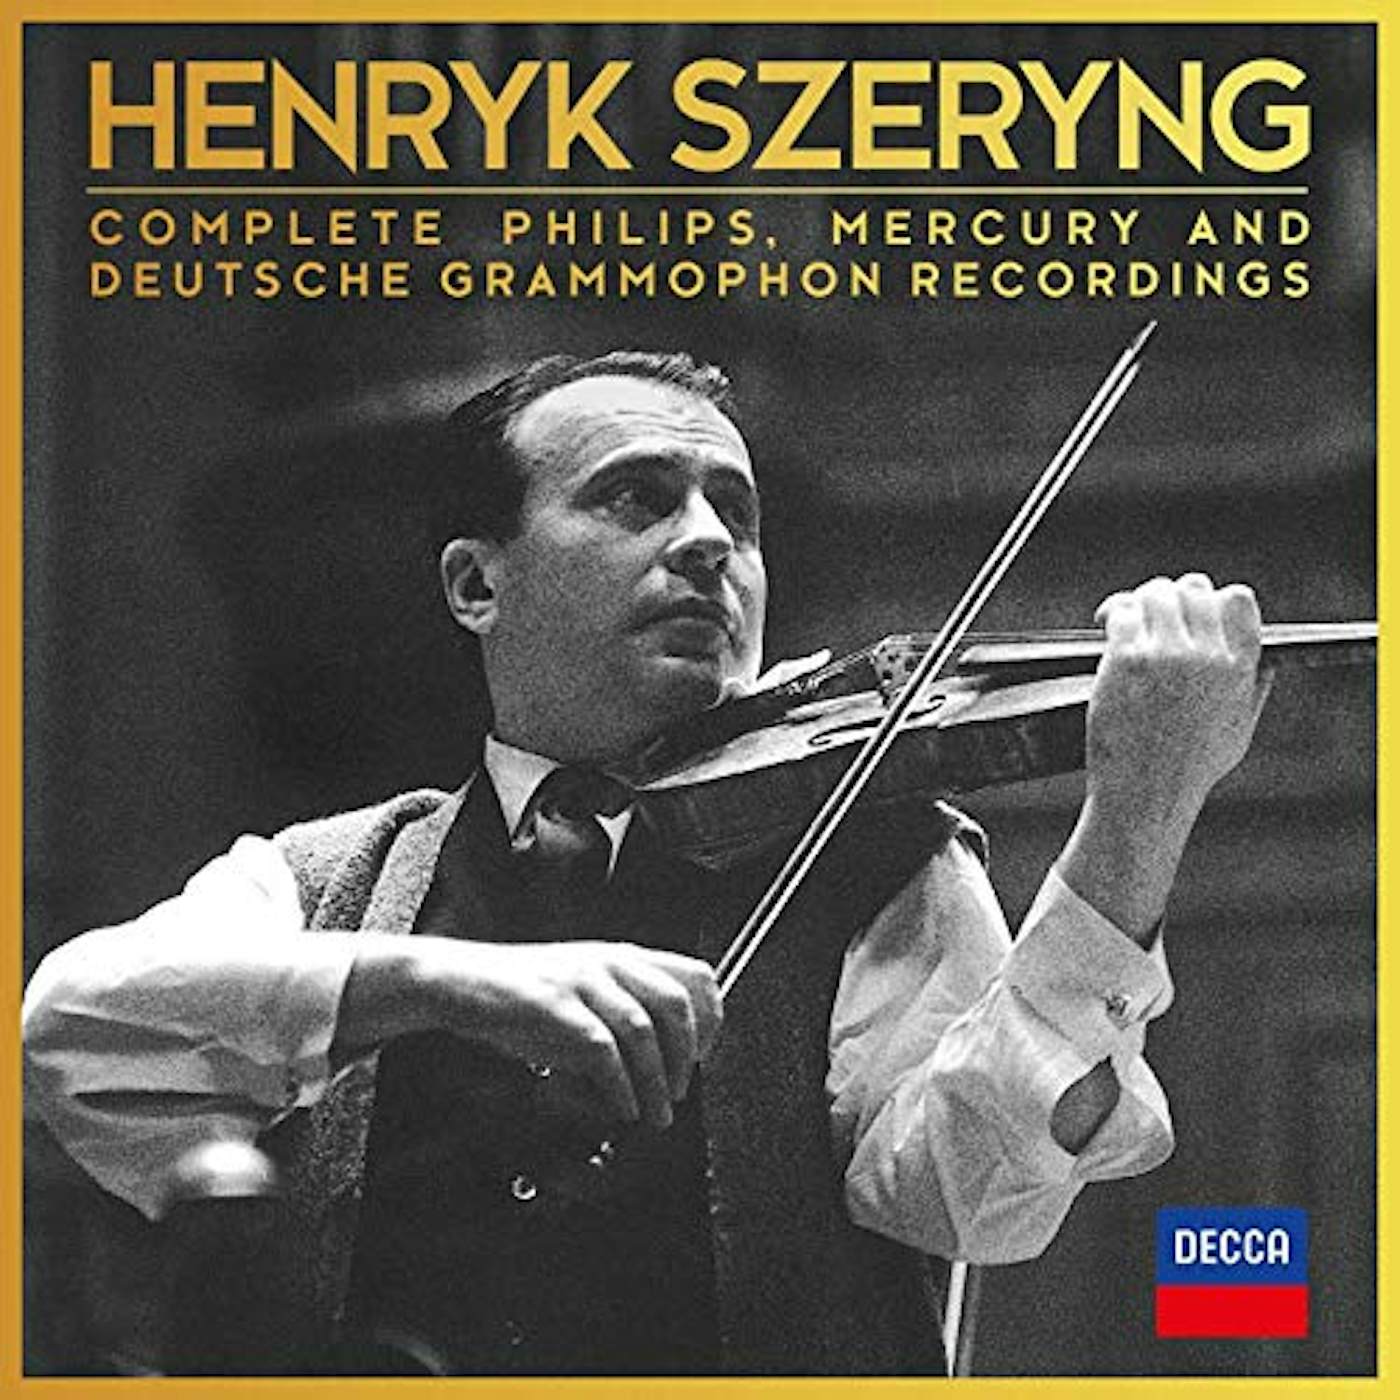 HENRYK SZERYNG COMPLETE EDITION CD